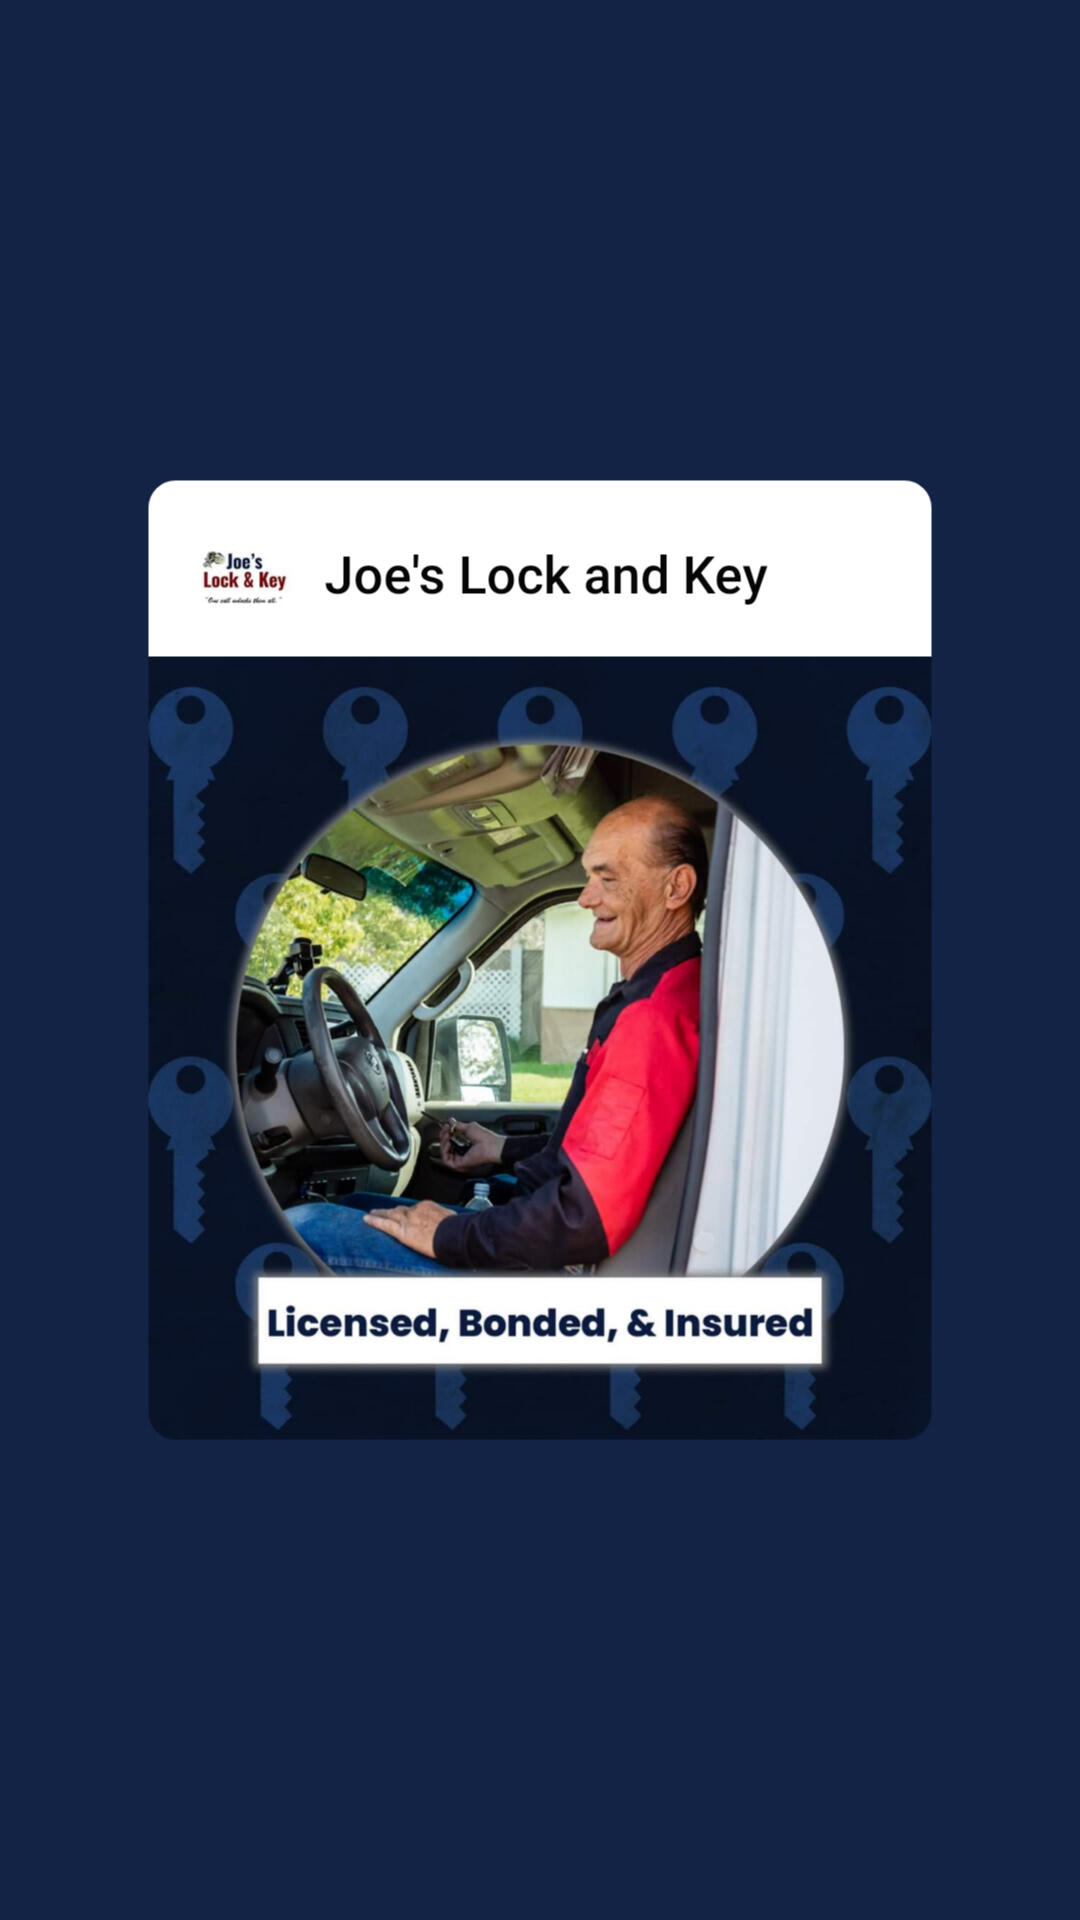 Commercial Services – Joe Joe's Lock & Key